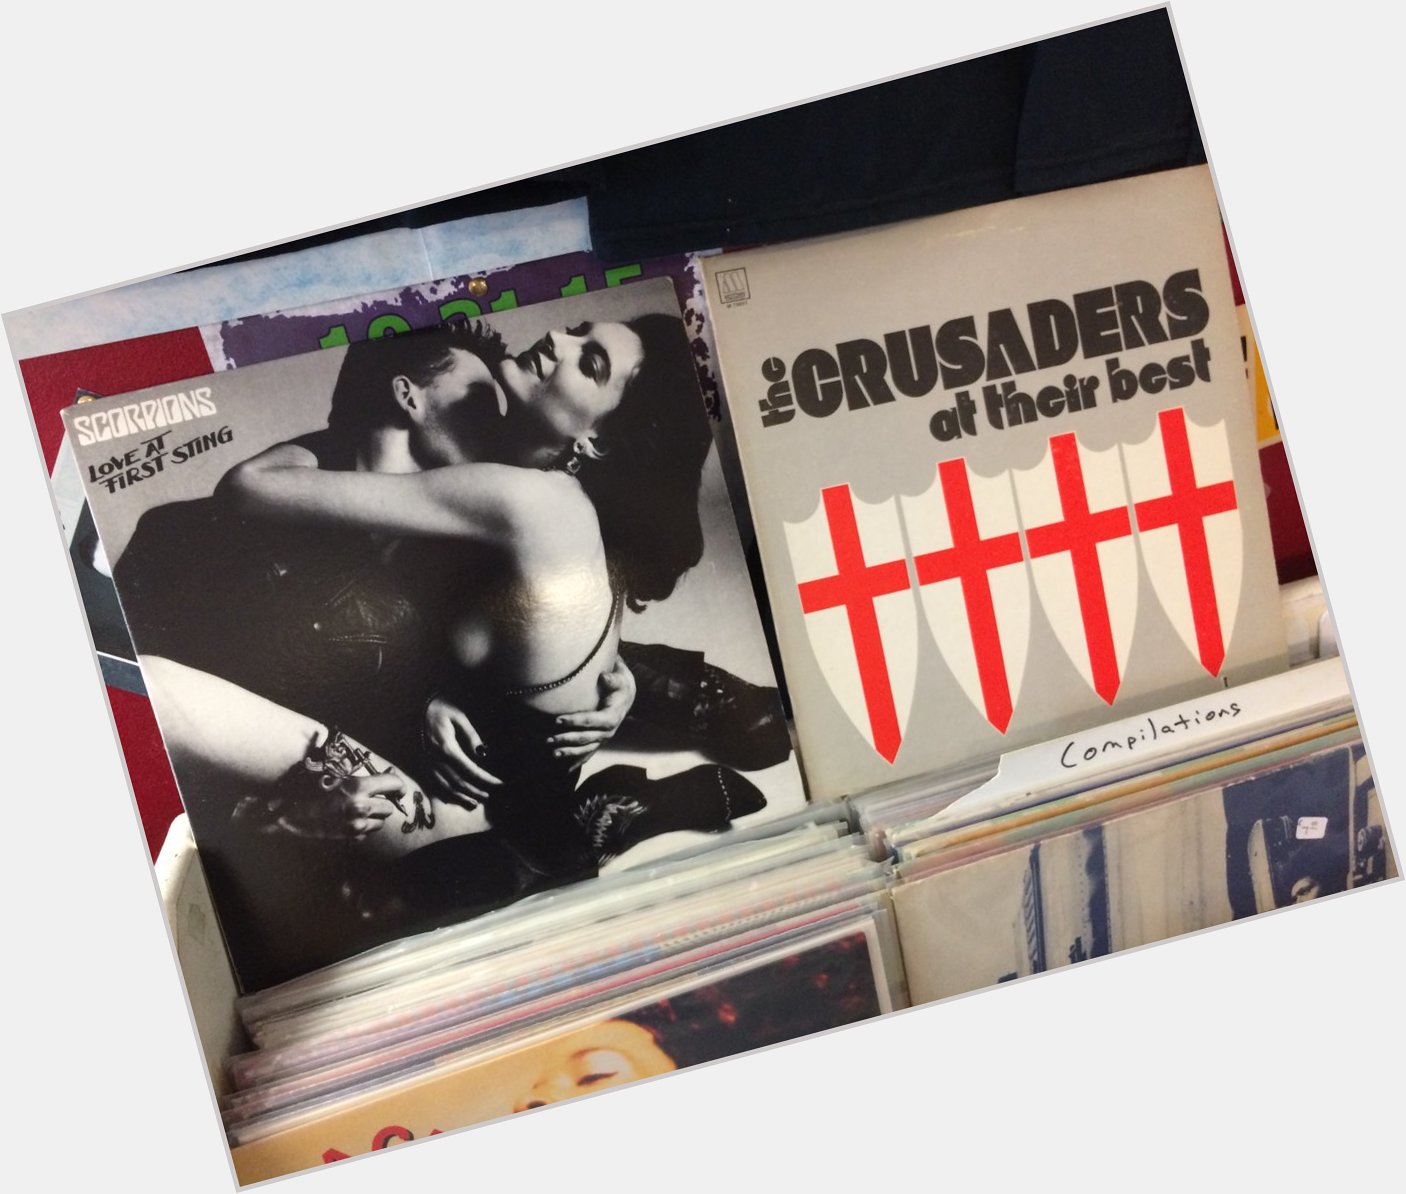 Happy Birthday to Rudolf Schenker of the Scorpions & the late Wilton Felder of the Crusaders 